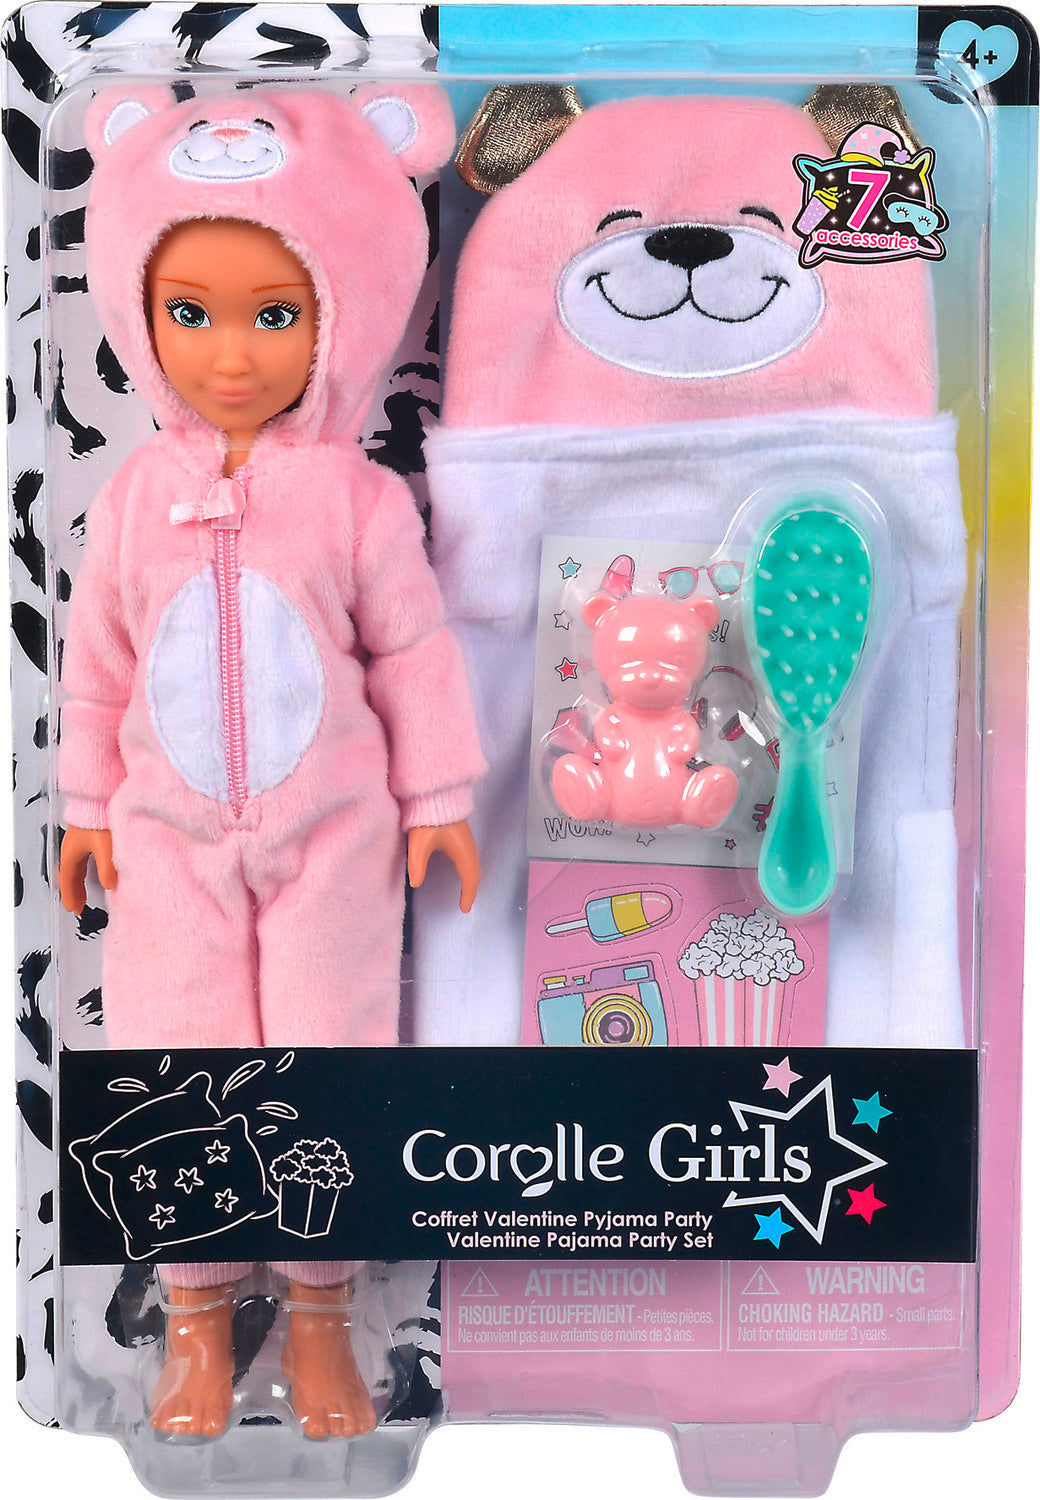 Corolle Girls Valentine Pajama Party Set